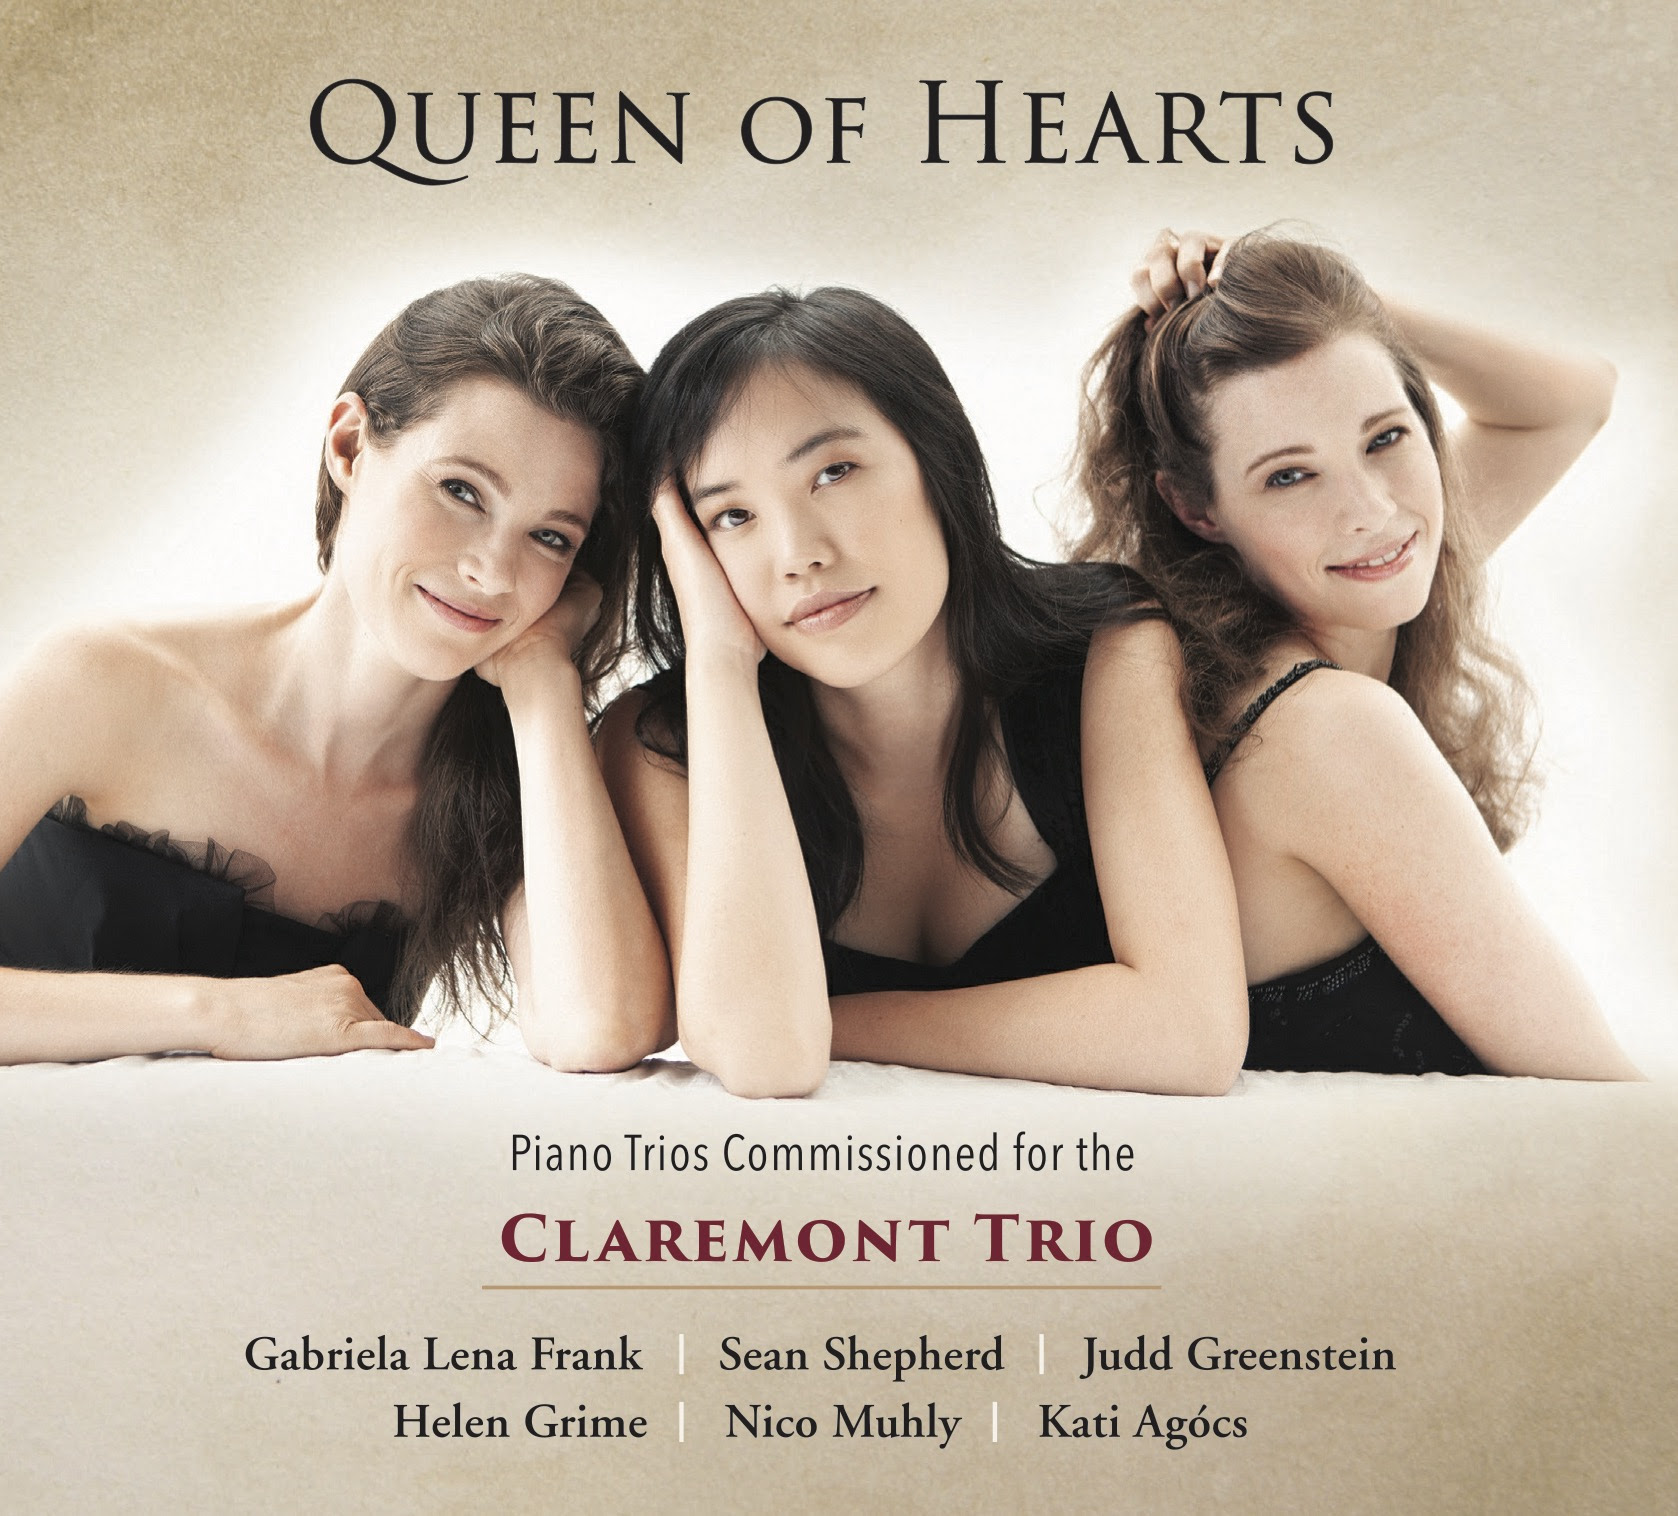 Queen of Hearts Cover Claremont Trio.jpg